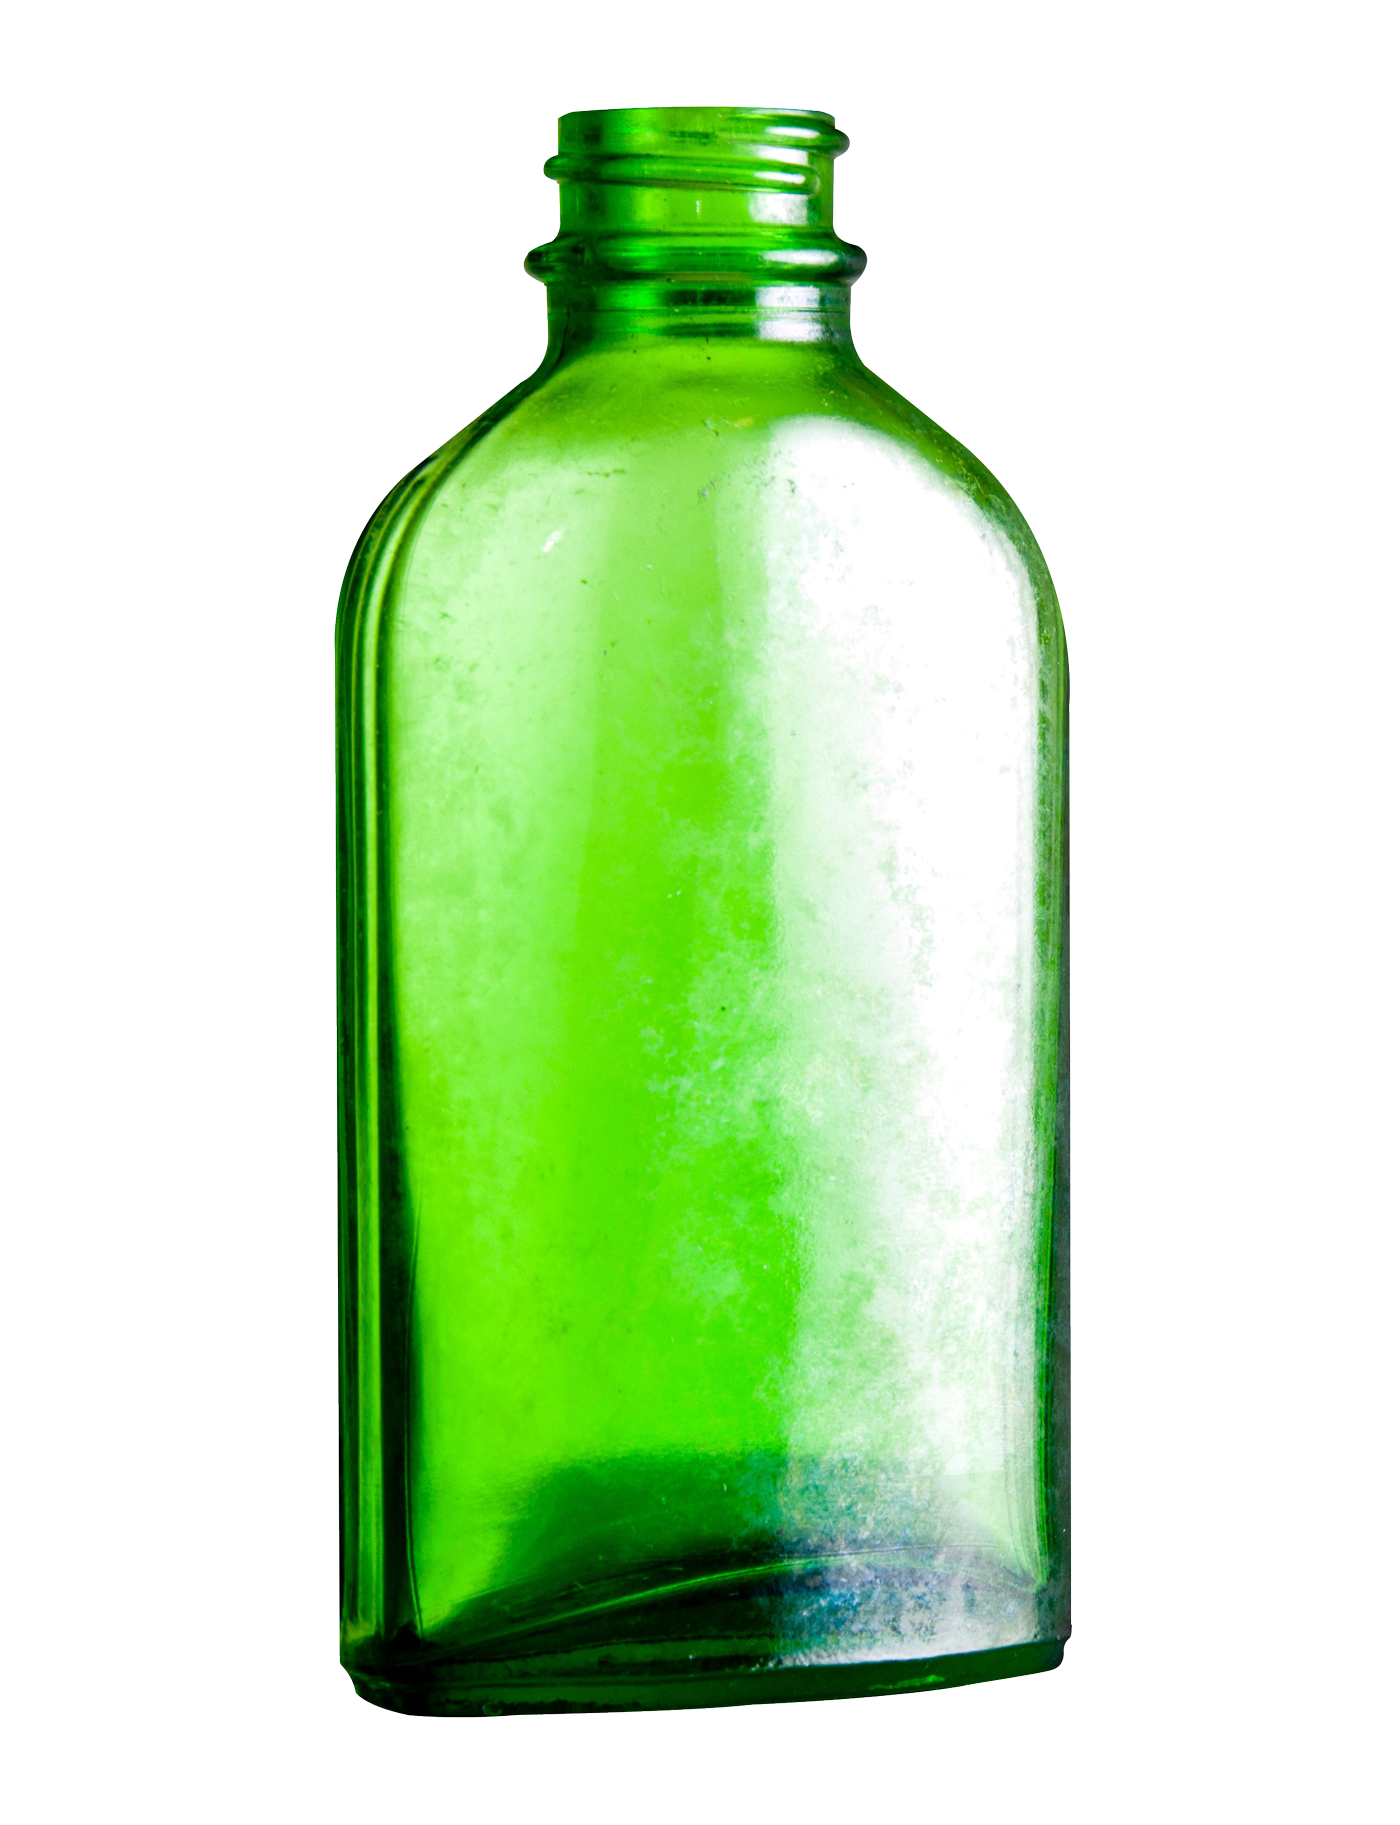 Images pngpix empty glass. Soda bottle png